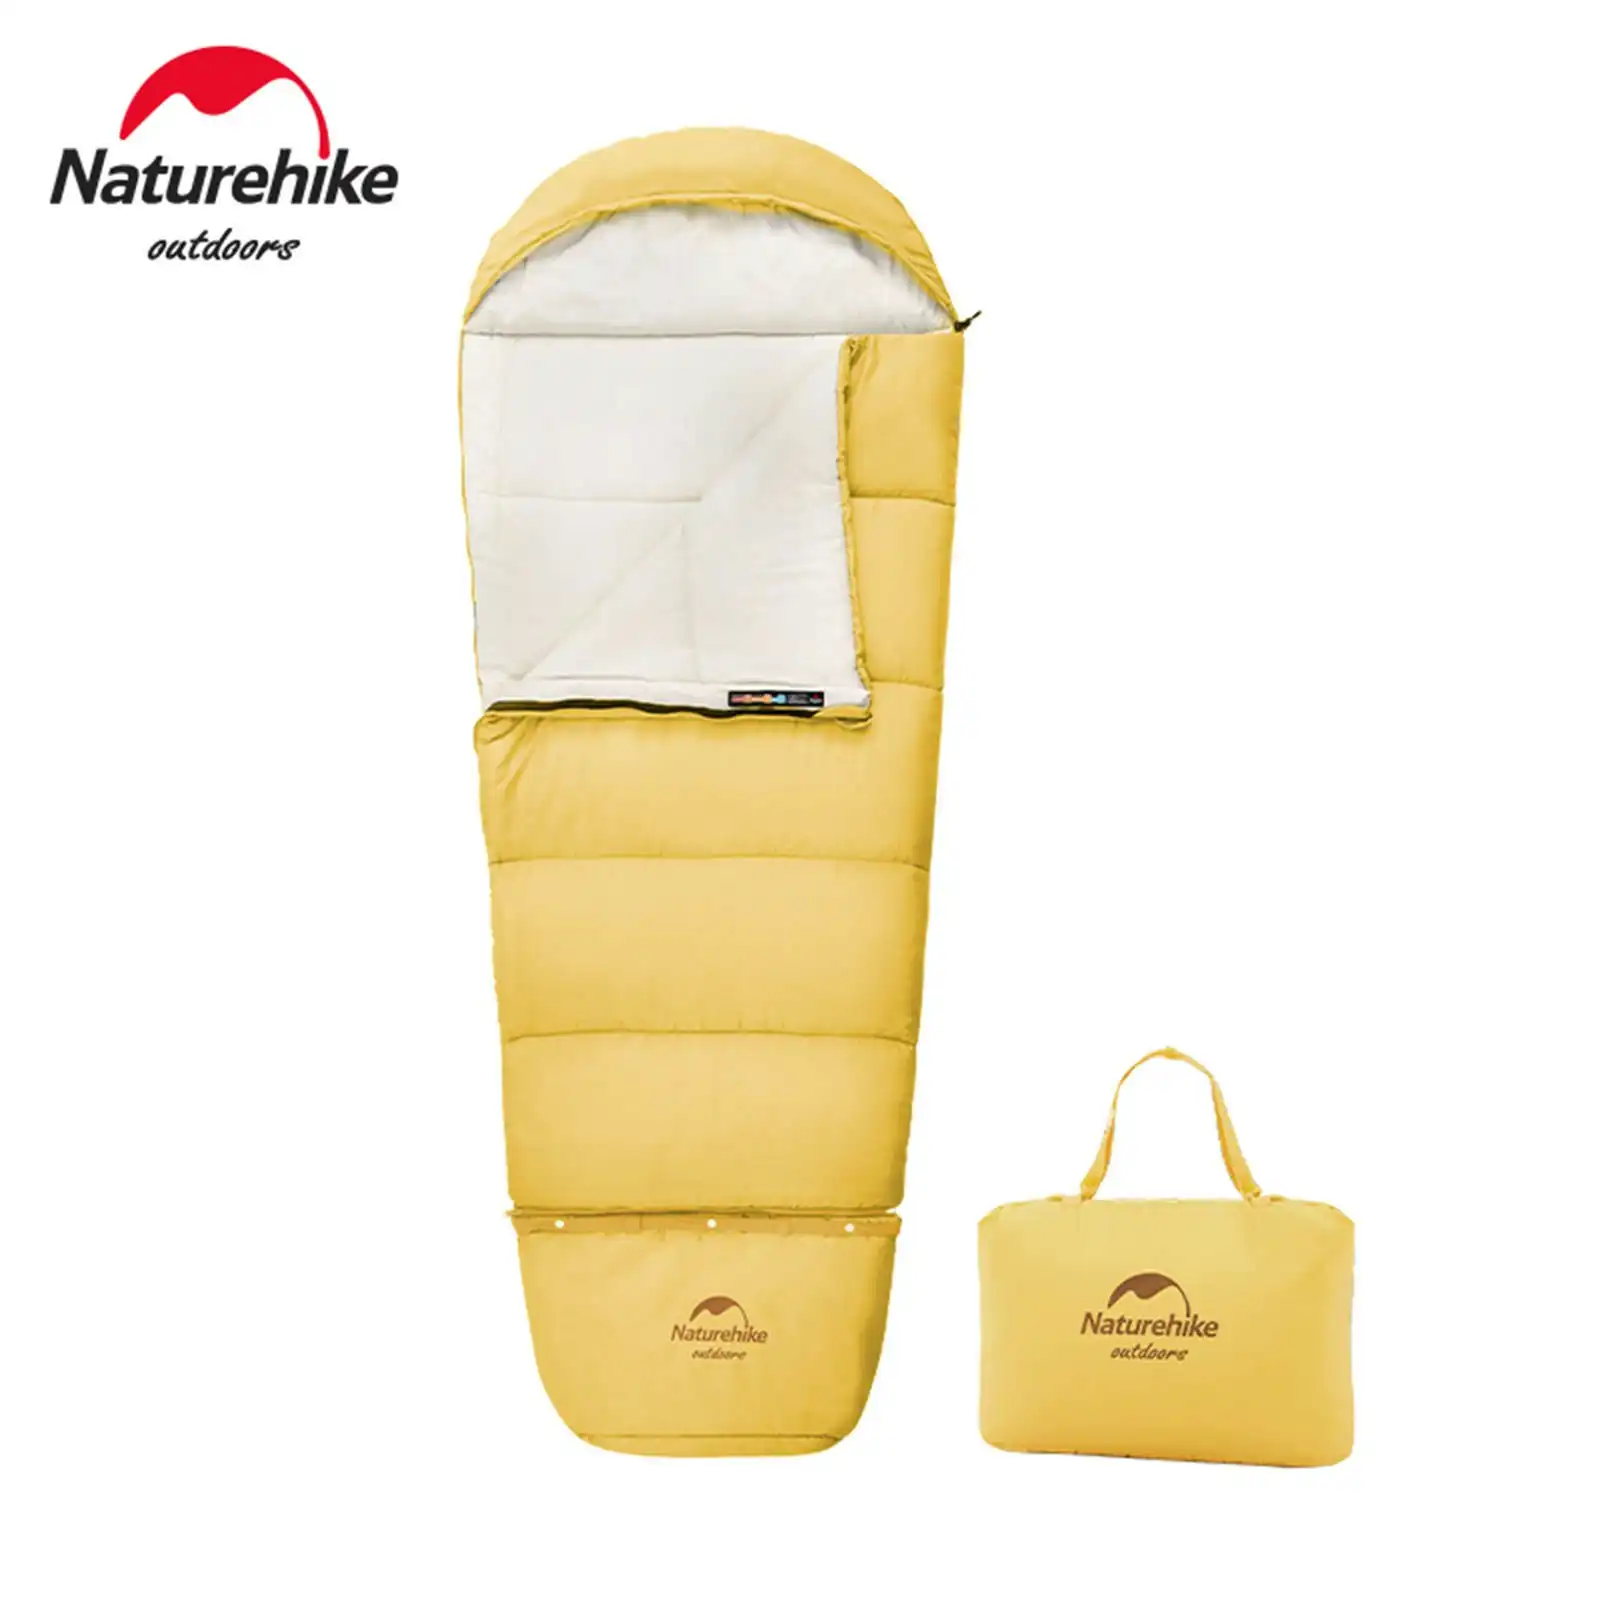 NatureHike Outdoor Children C300 Camping Sleeping Bag Hiking Gears Envelope Children Kid Sleeping Bag - Yellow